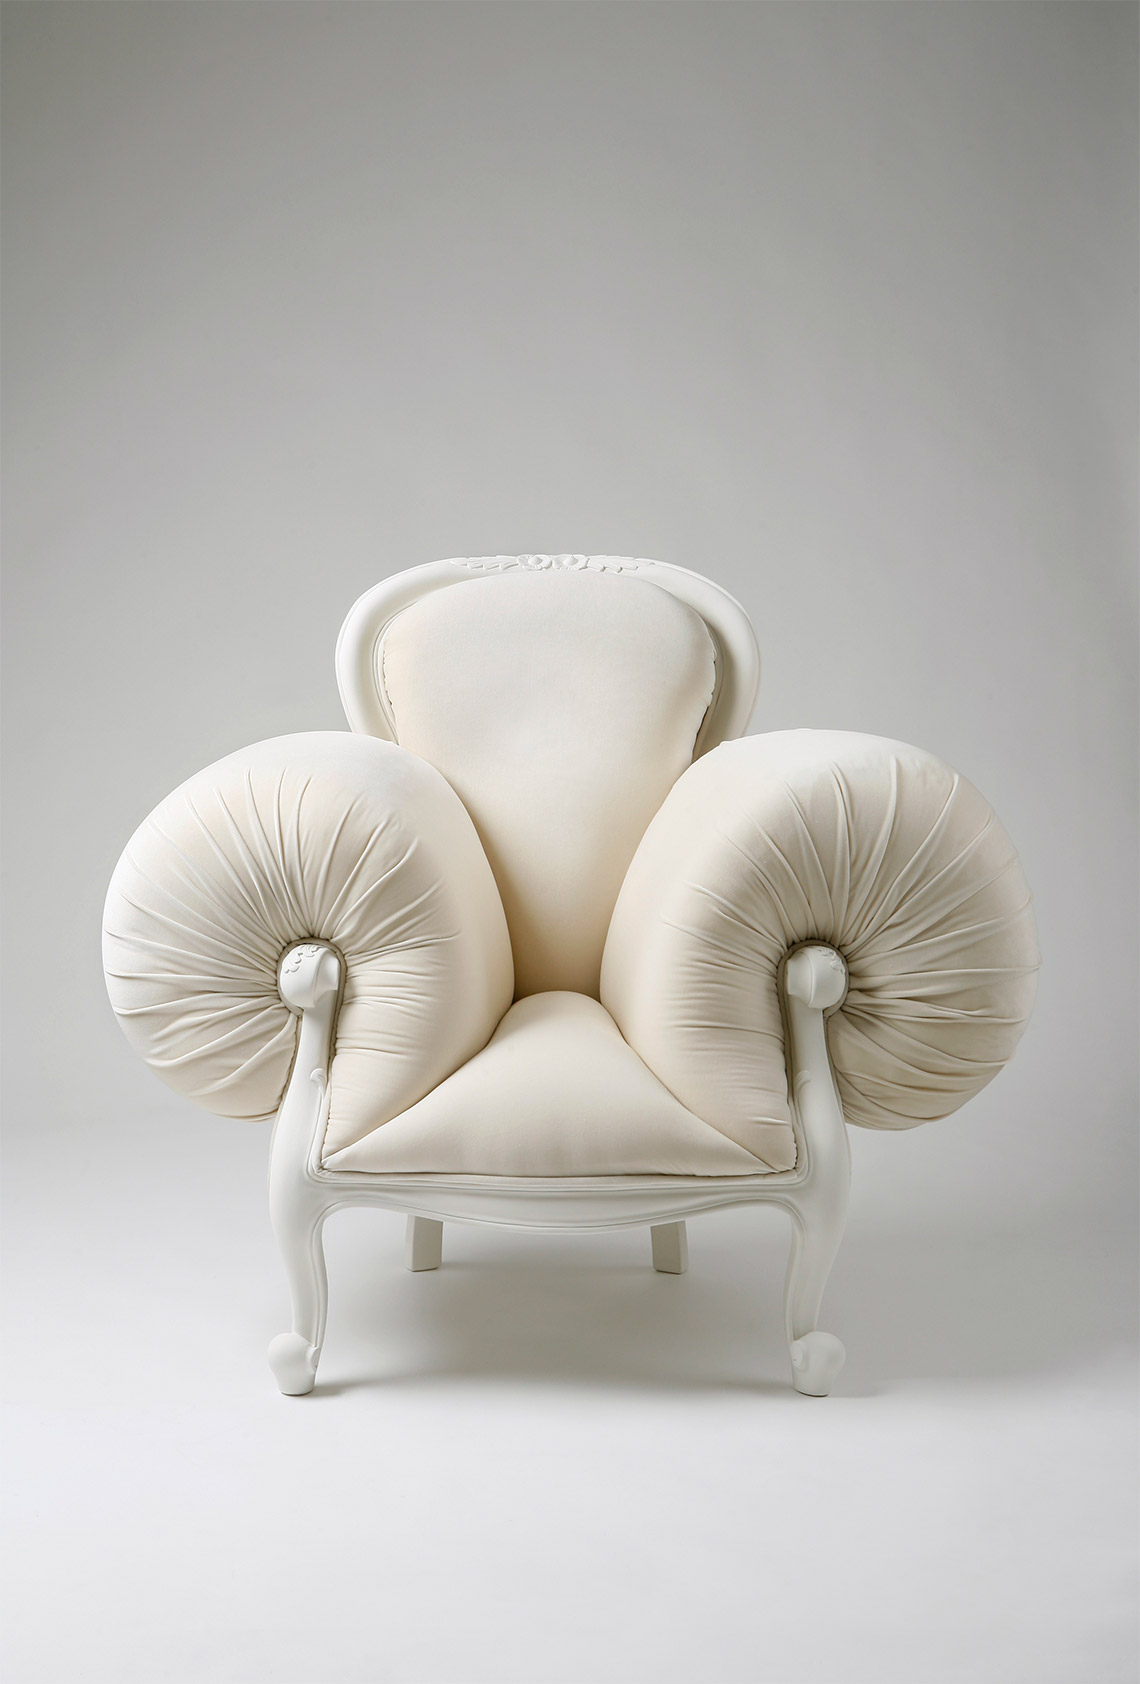 surreal-french-furniture-design-lila-jang